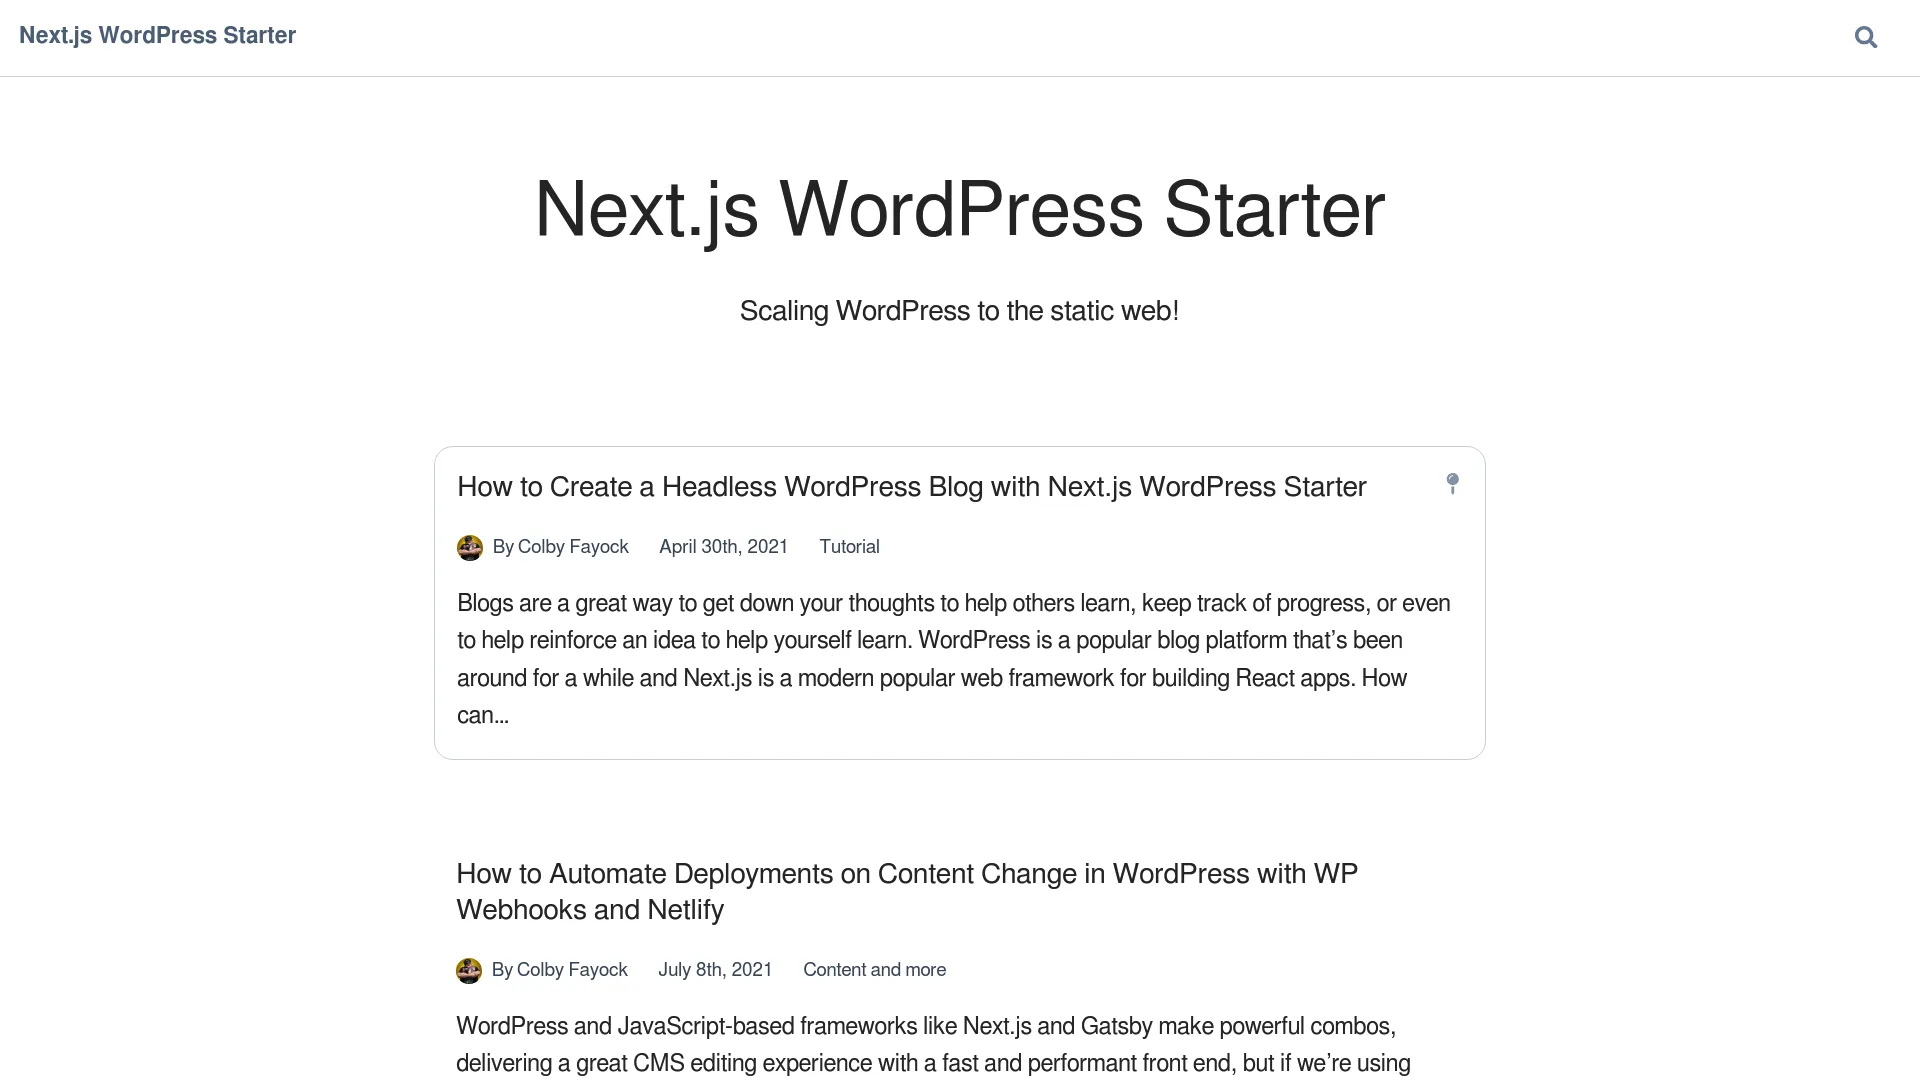 Next Wordpress Starter screenshot